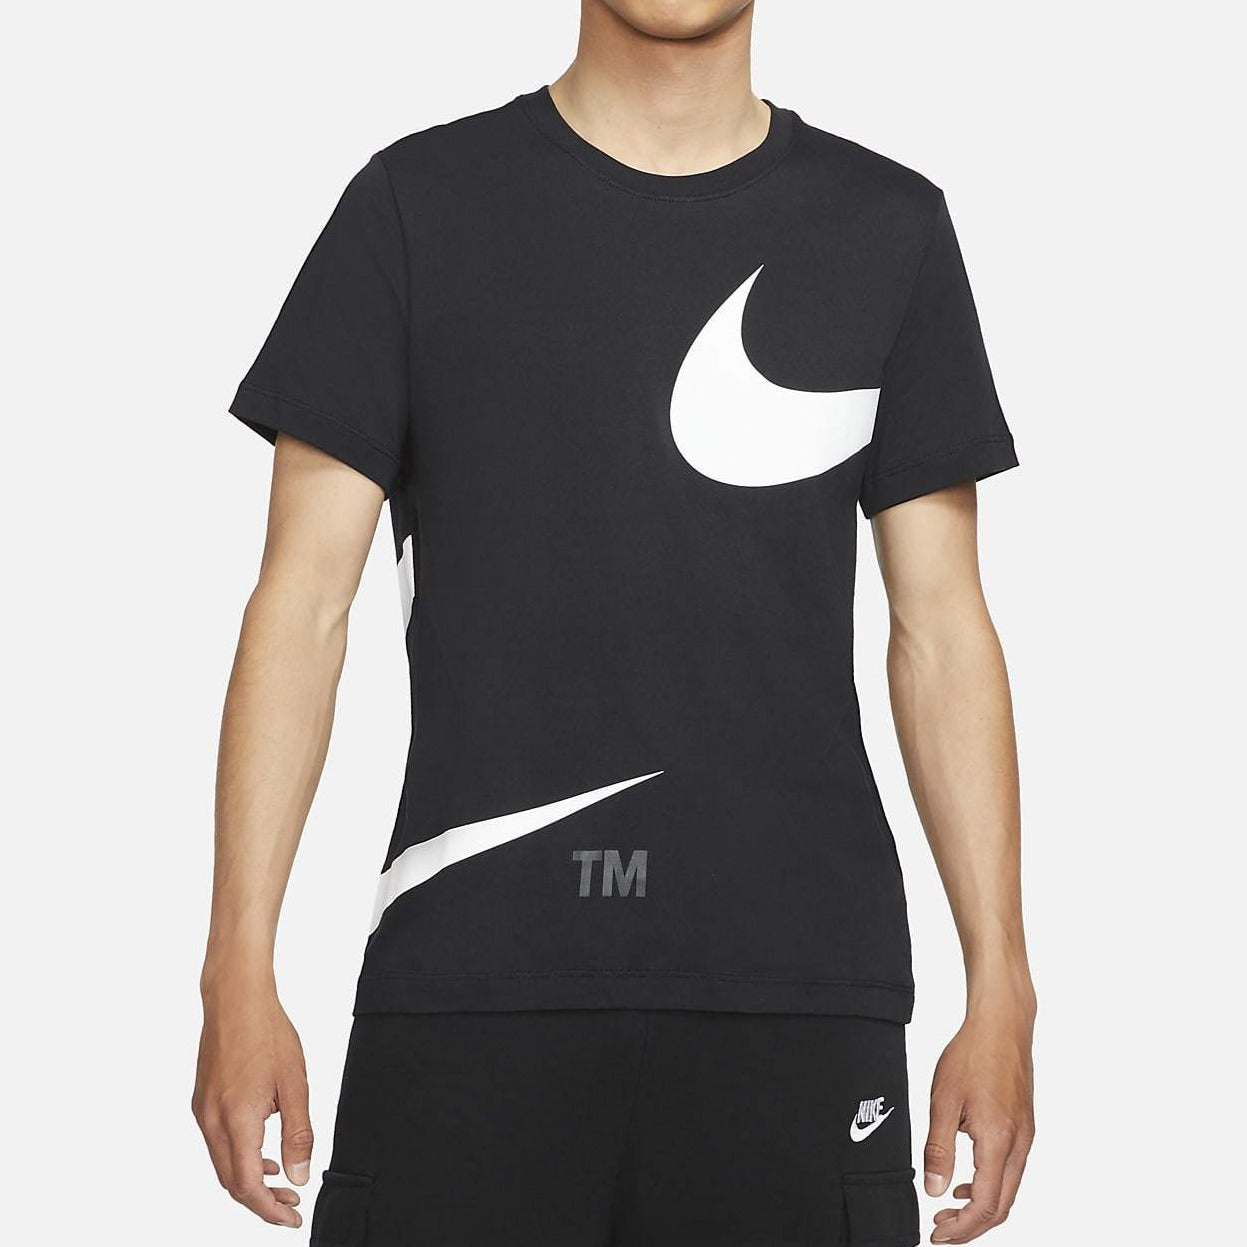 Nike Sportswear Big Swoosh T-shirt / White